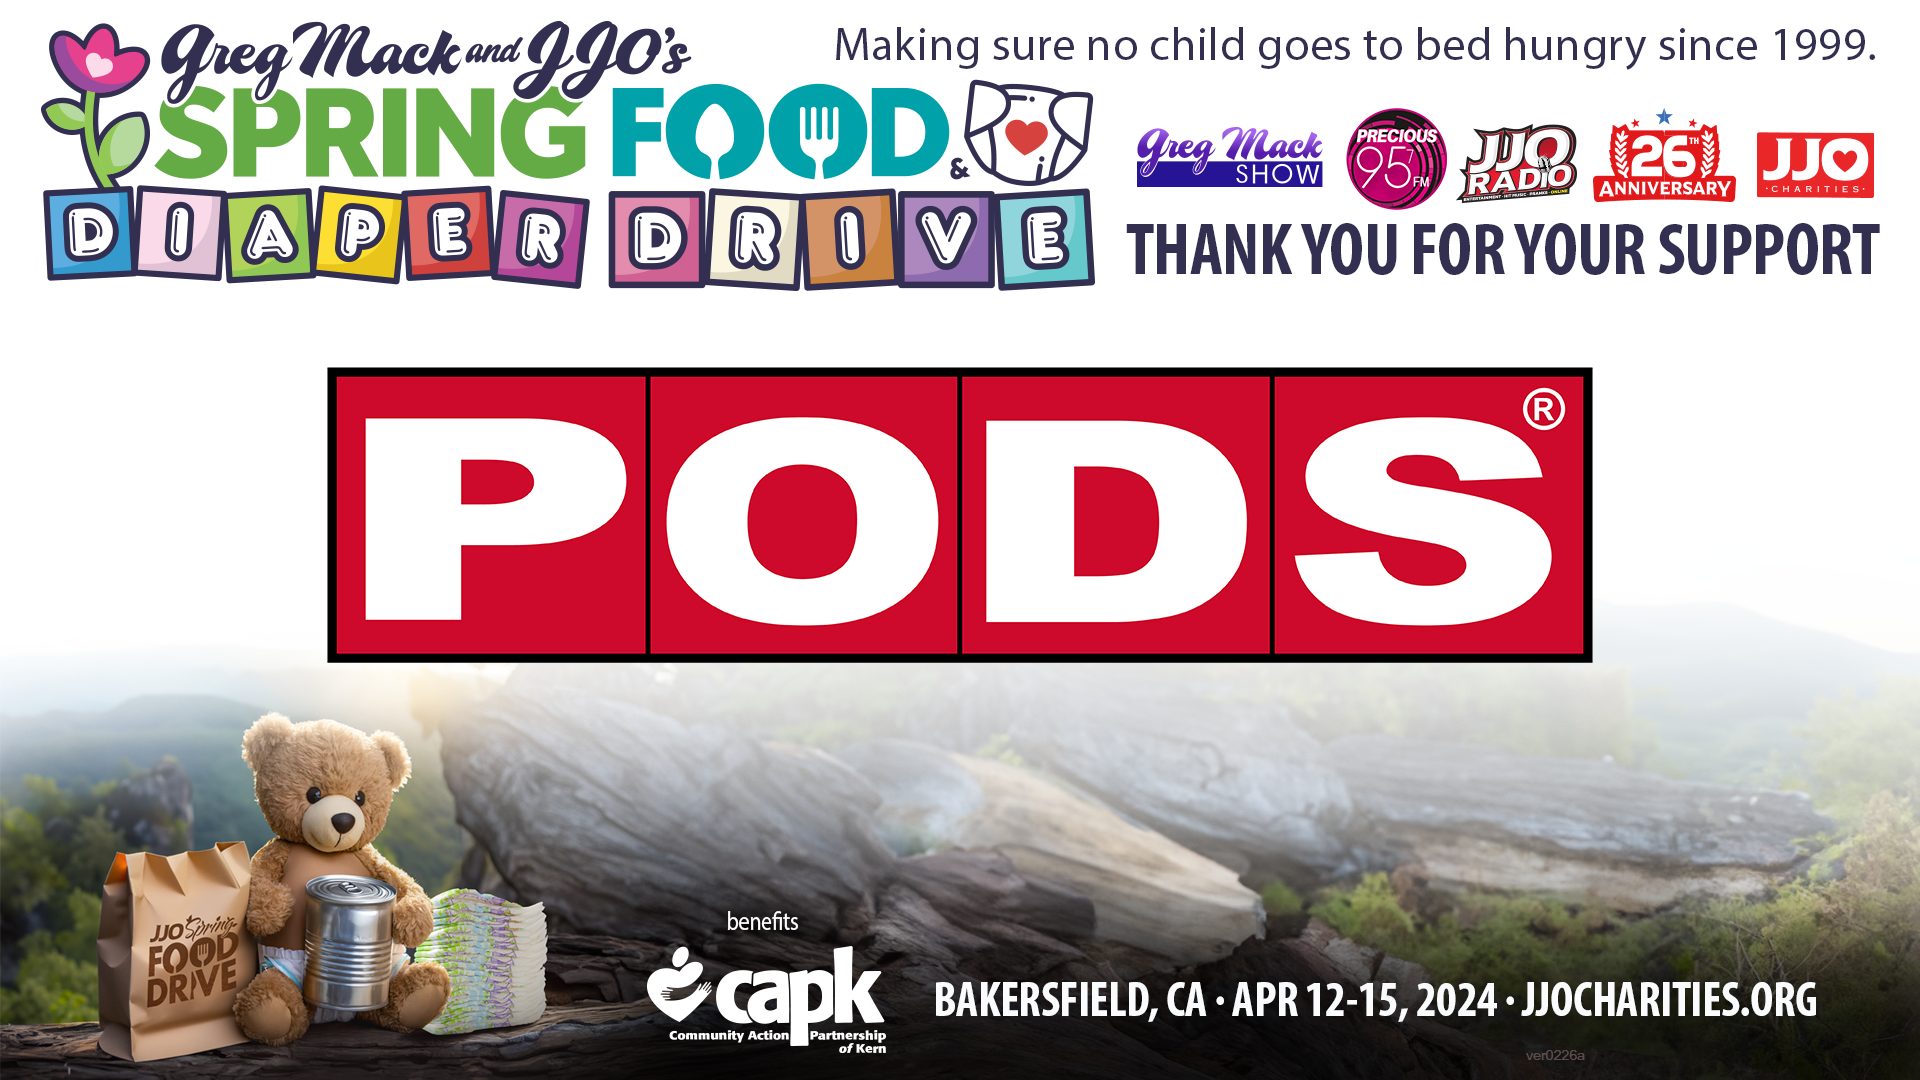 Greg Mack & JJO's Spring Food & Diaper Drive Thank You PODS